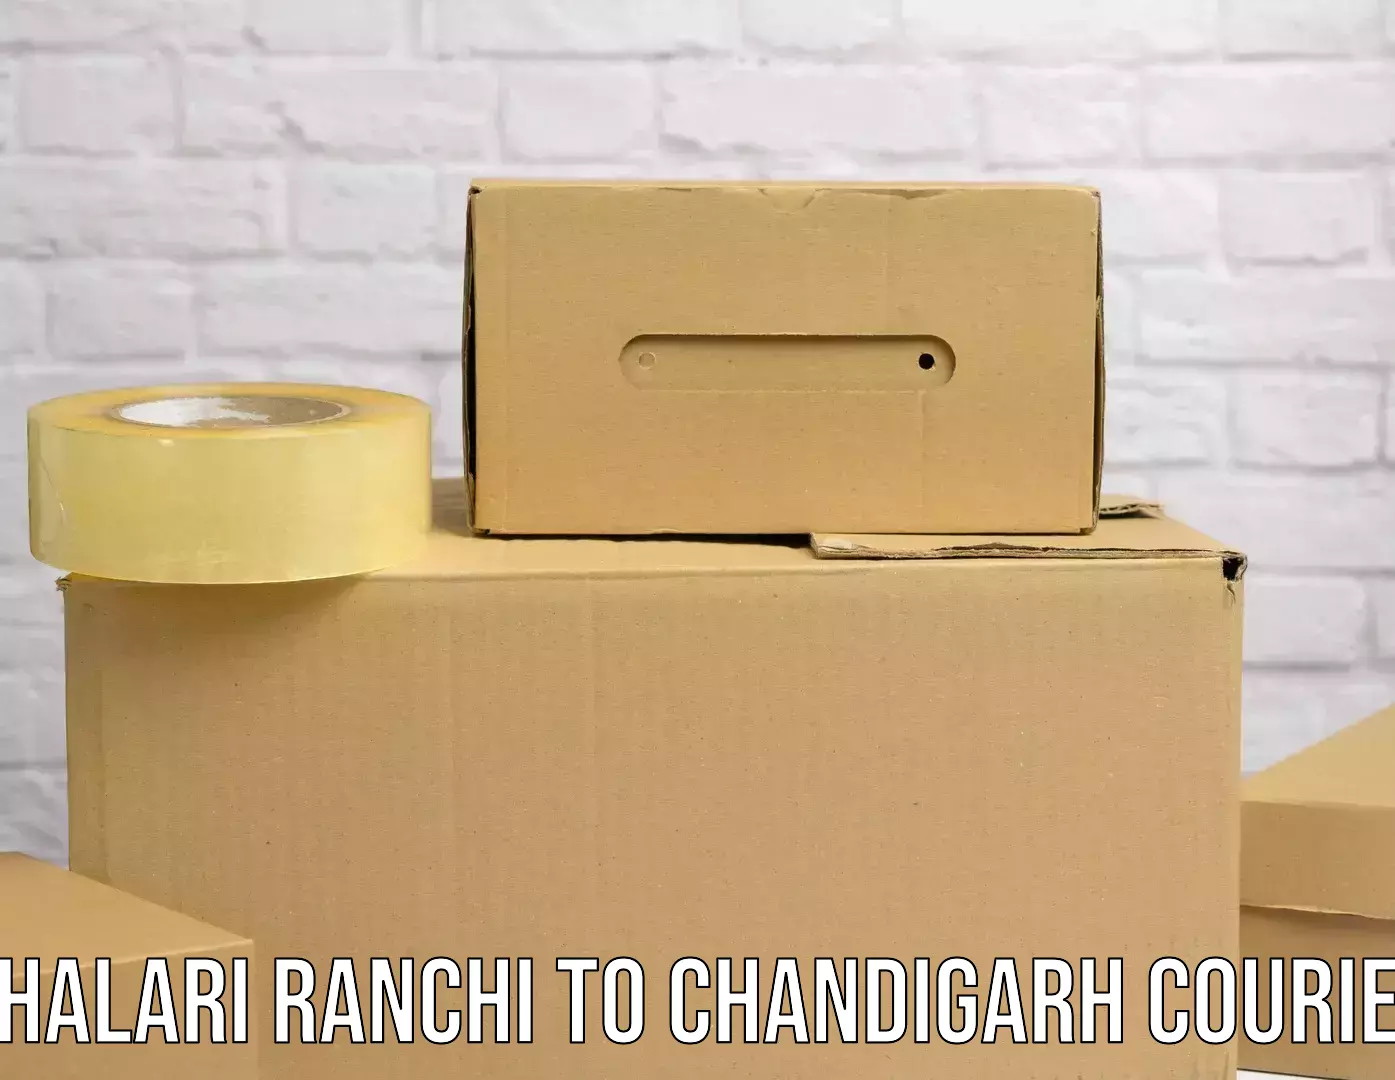 Same-day delivery options Khalari Ranchi to Panjab University Chandigarh